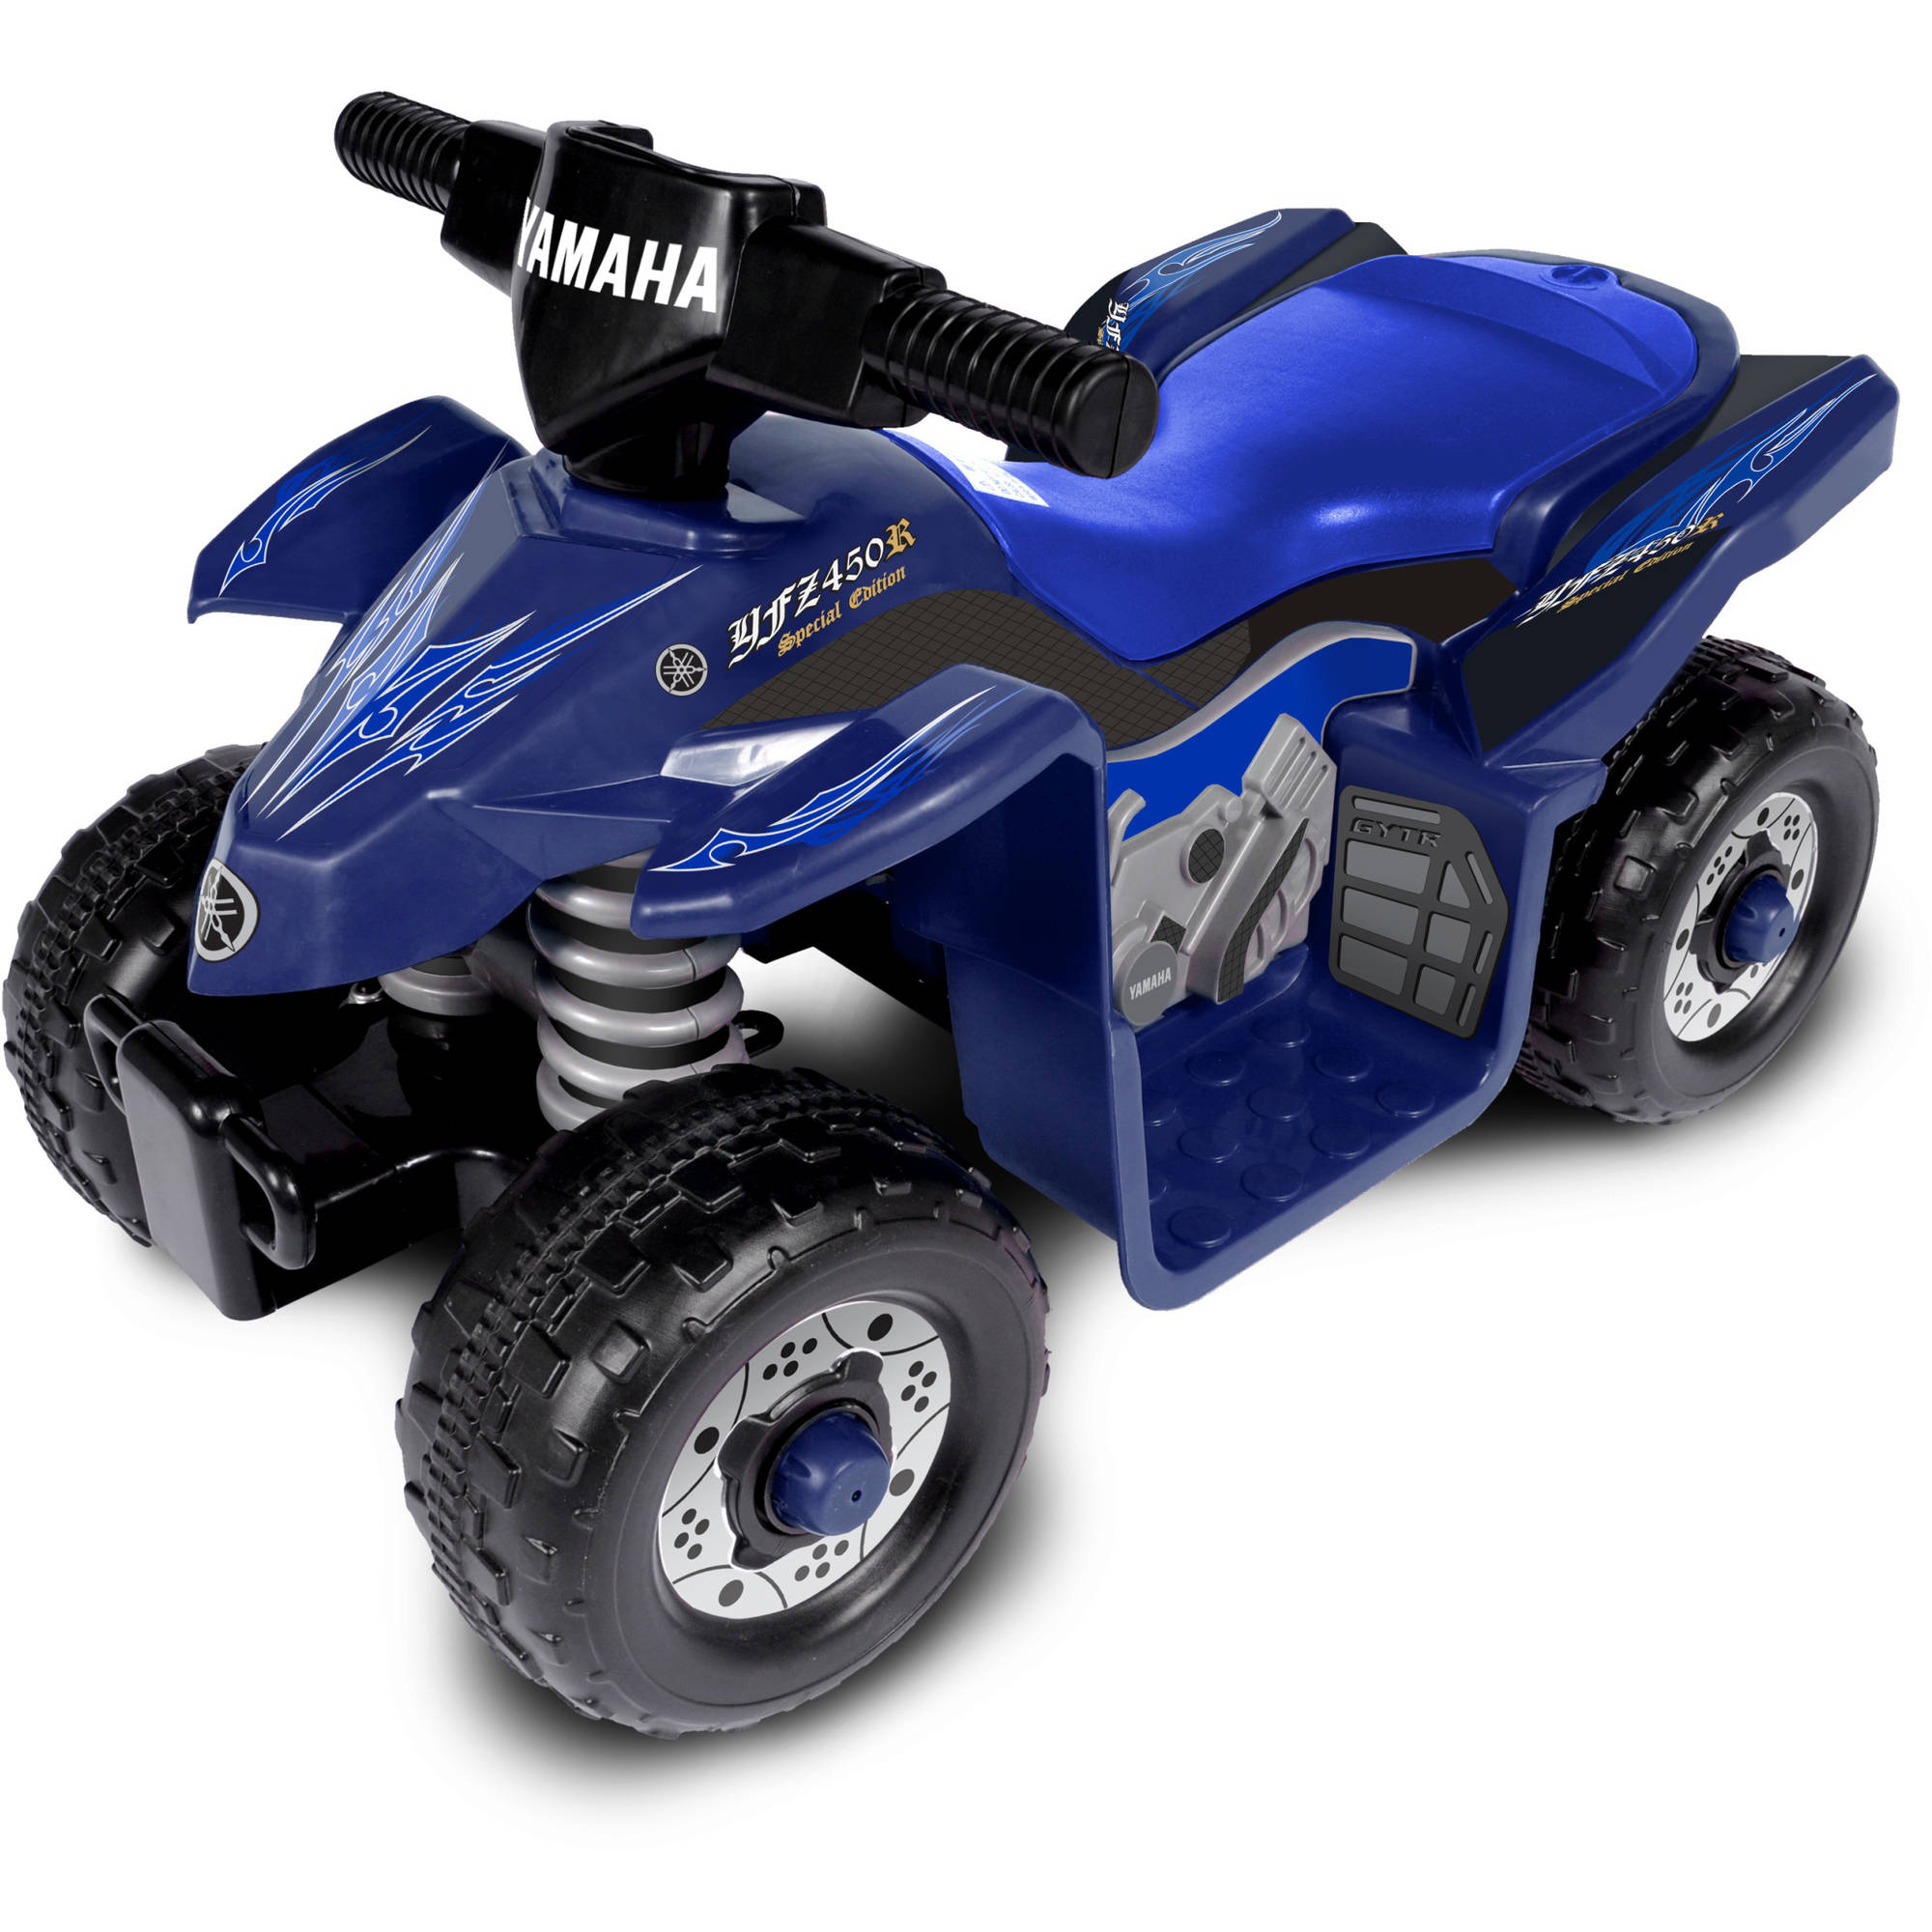 Yamaha ATV 6-Volt Battery-Powered Ride-On - image 2 of 5